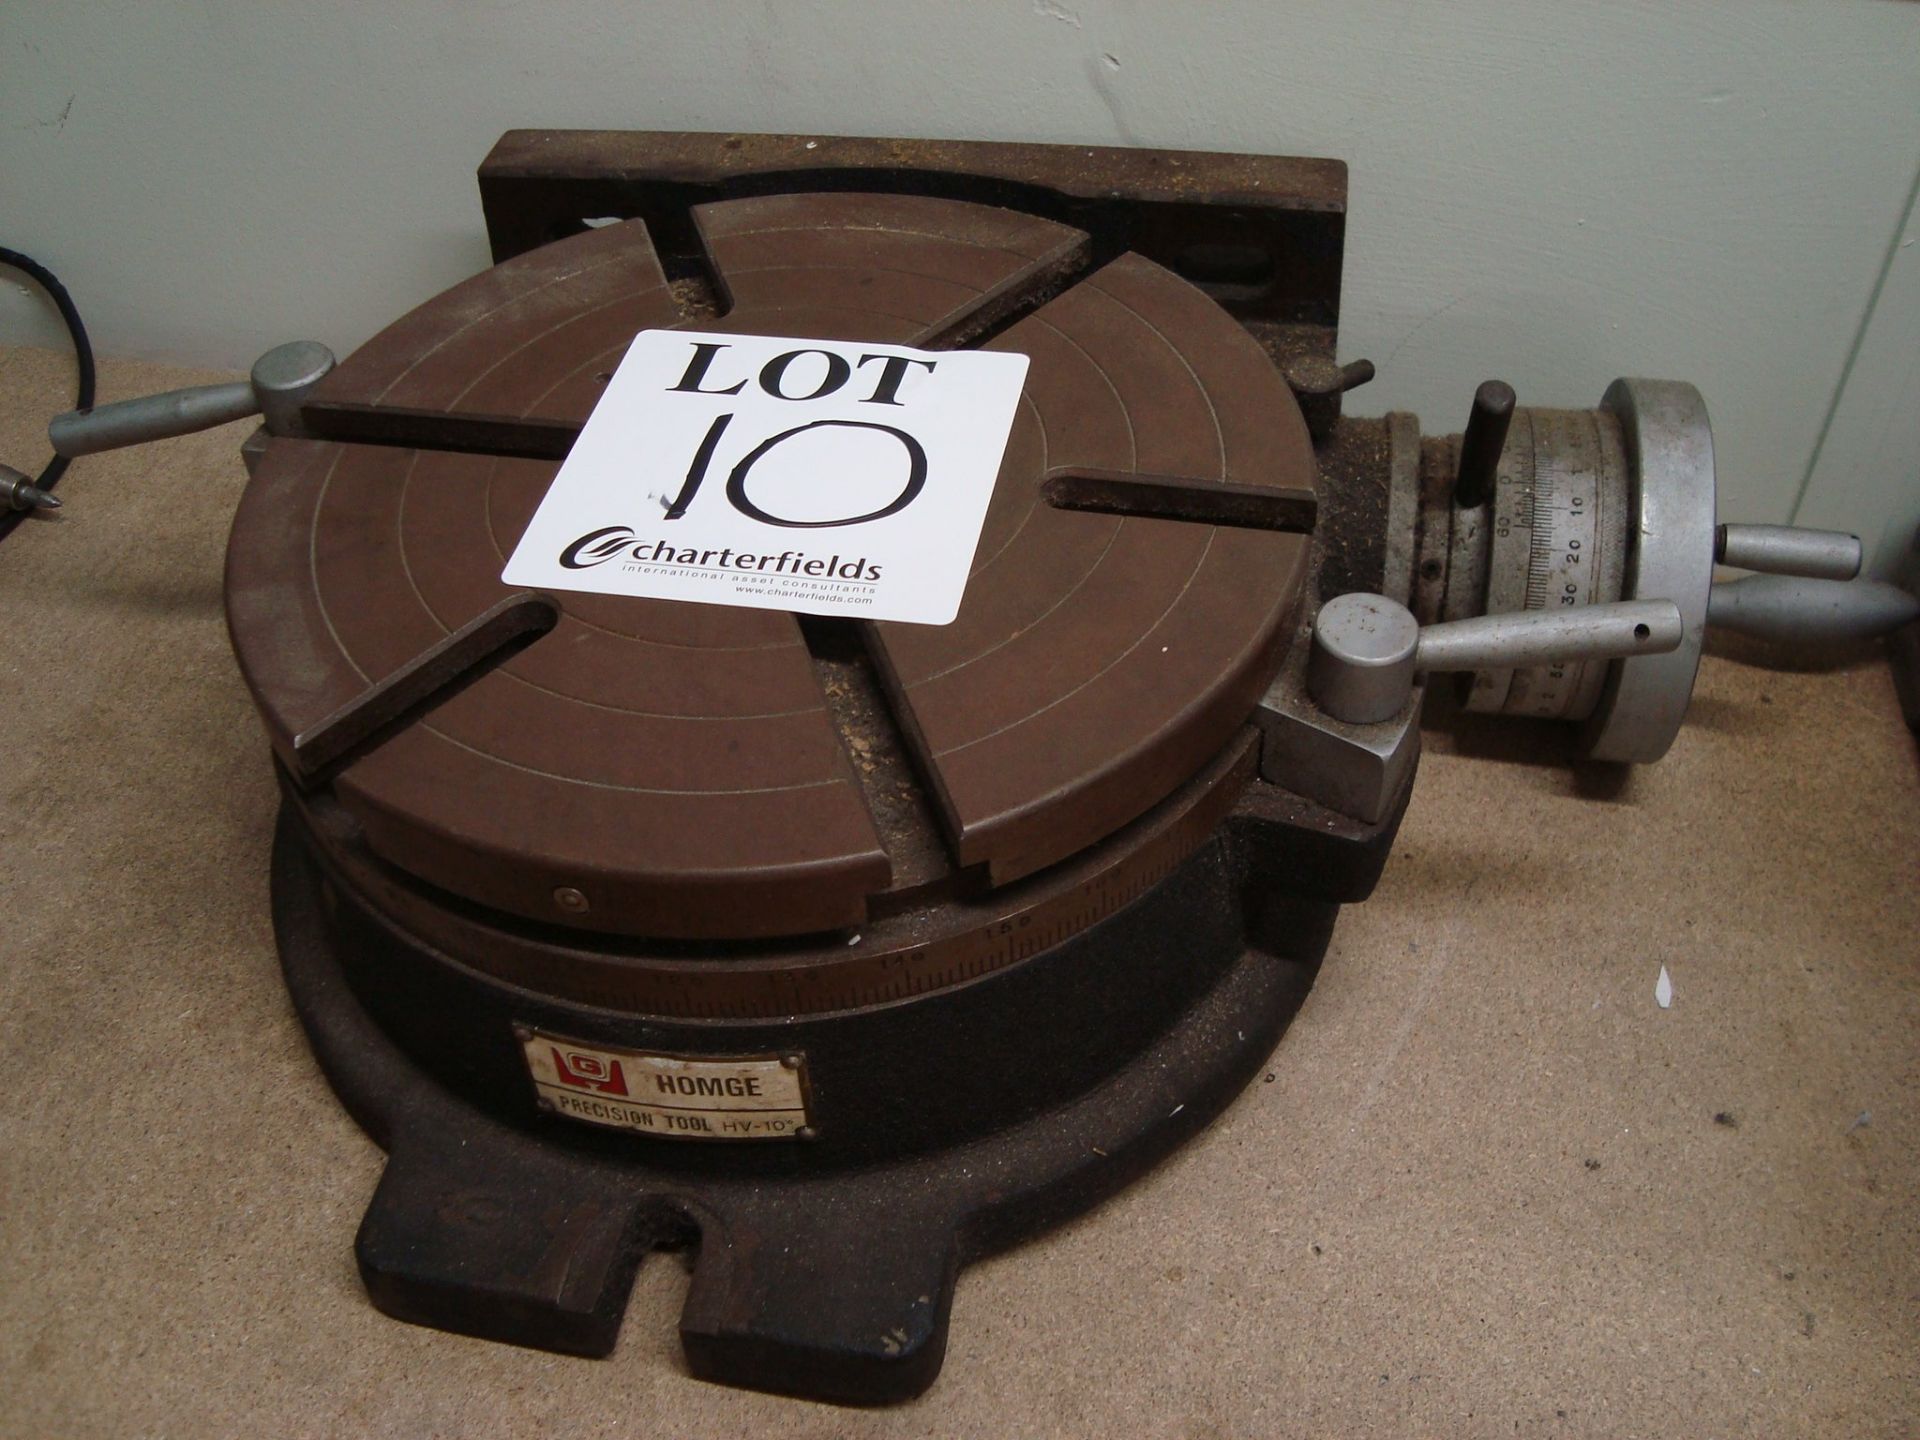 A Homge HV-10 rotary table